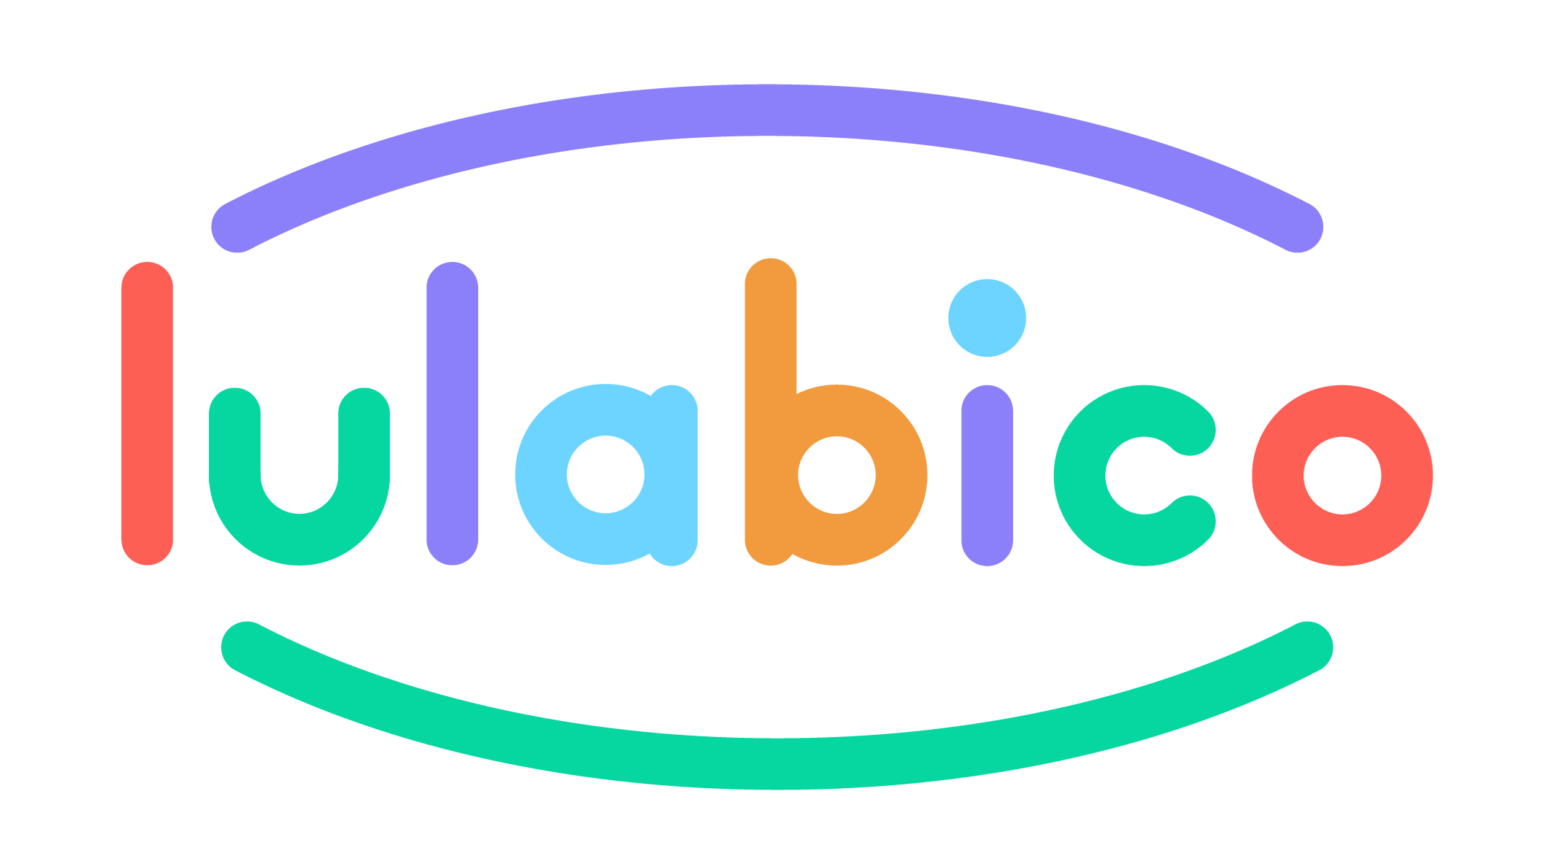 Lulabico Logo